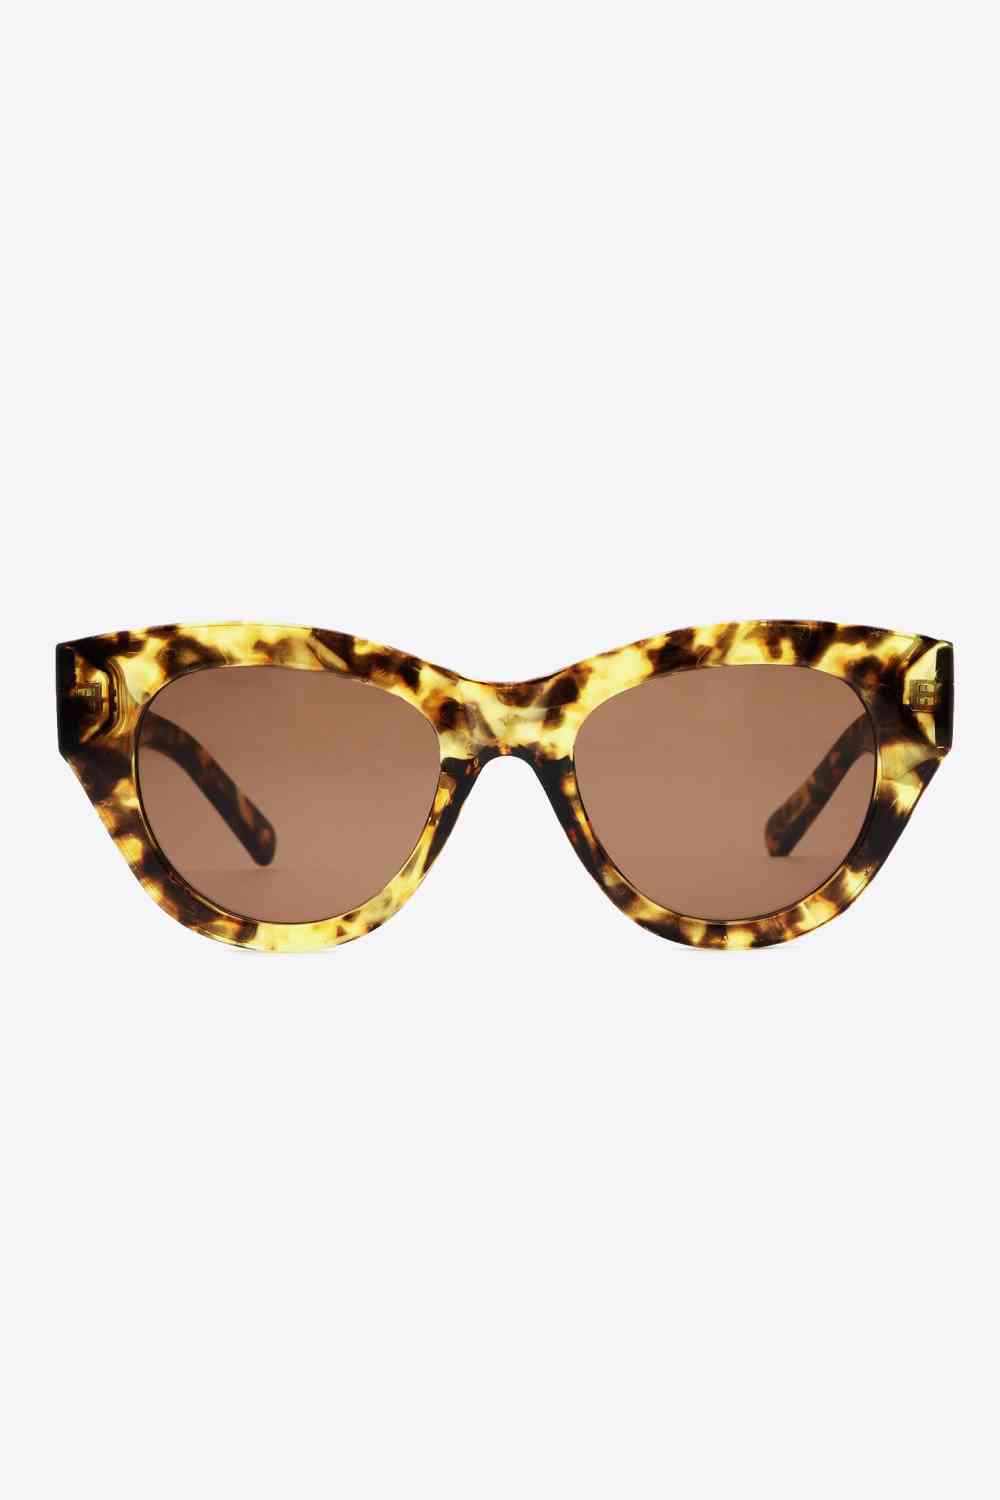 Wren Sunglasses